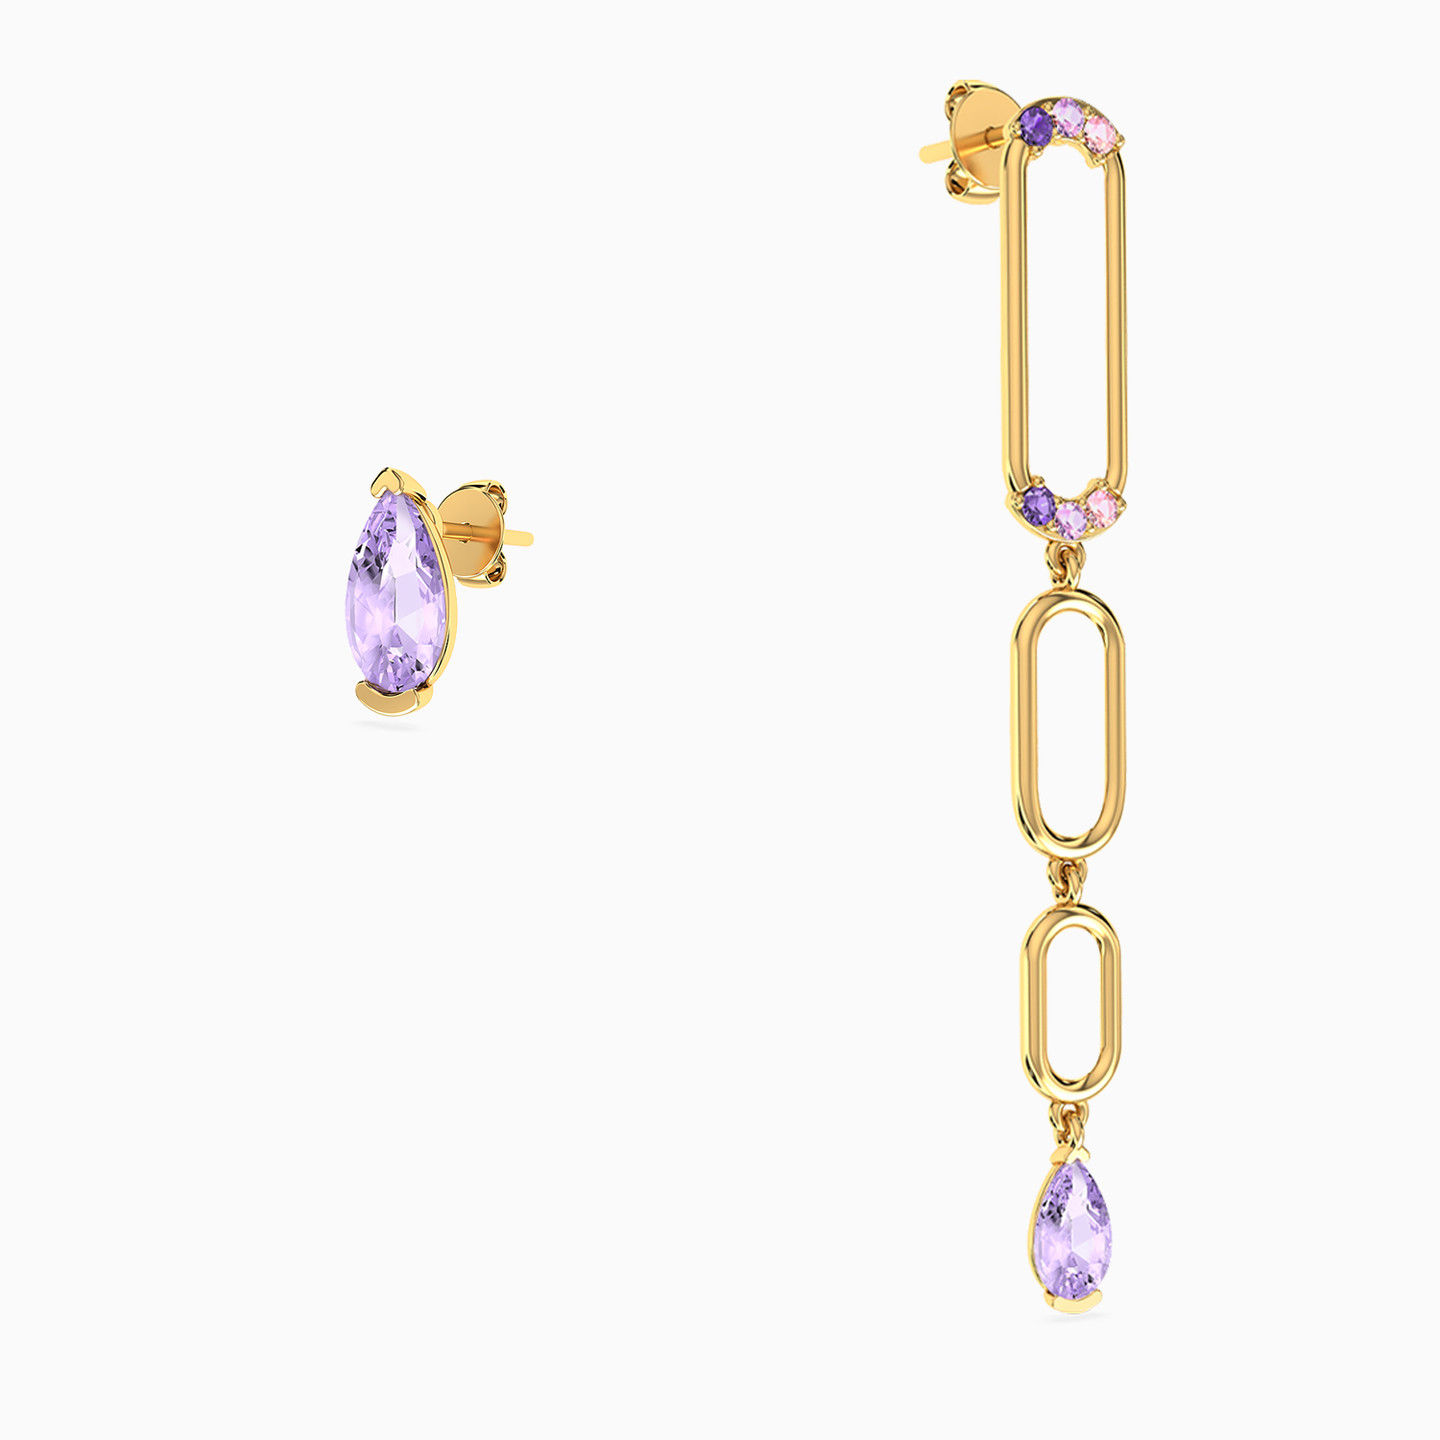 18K Gold Colored Stones Drop & Stud Earrings - 3